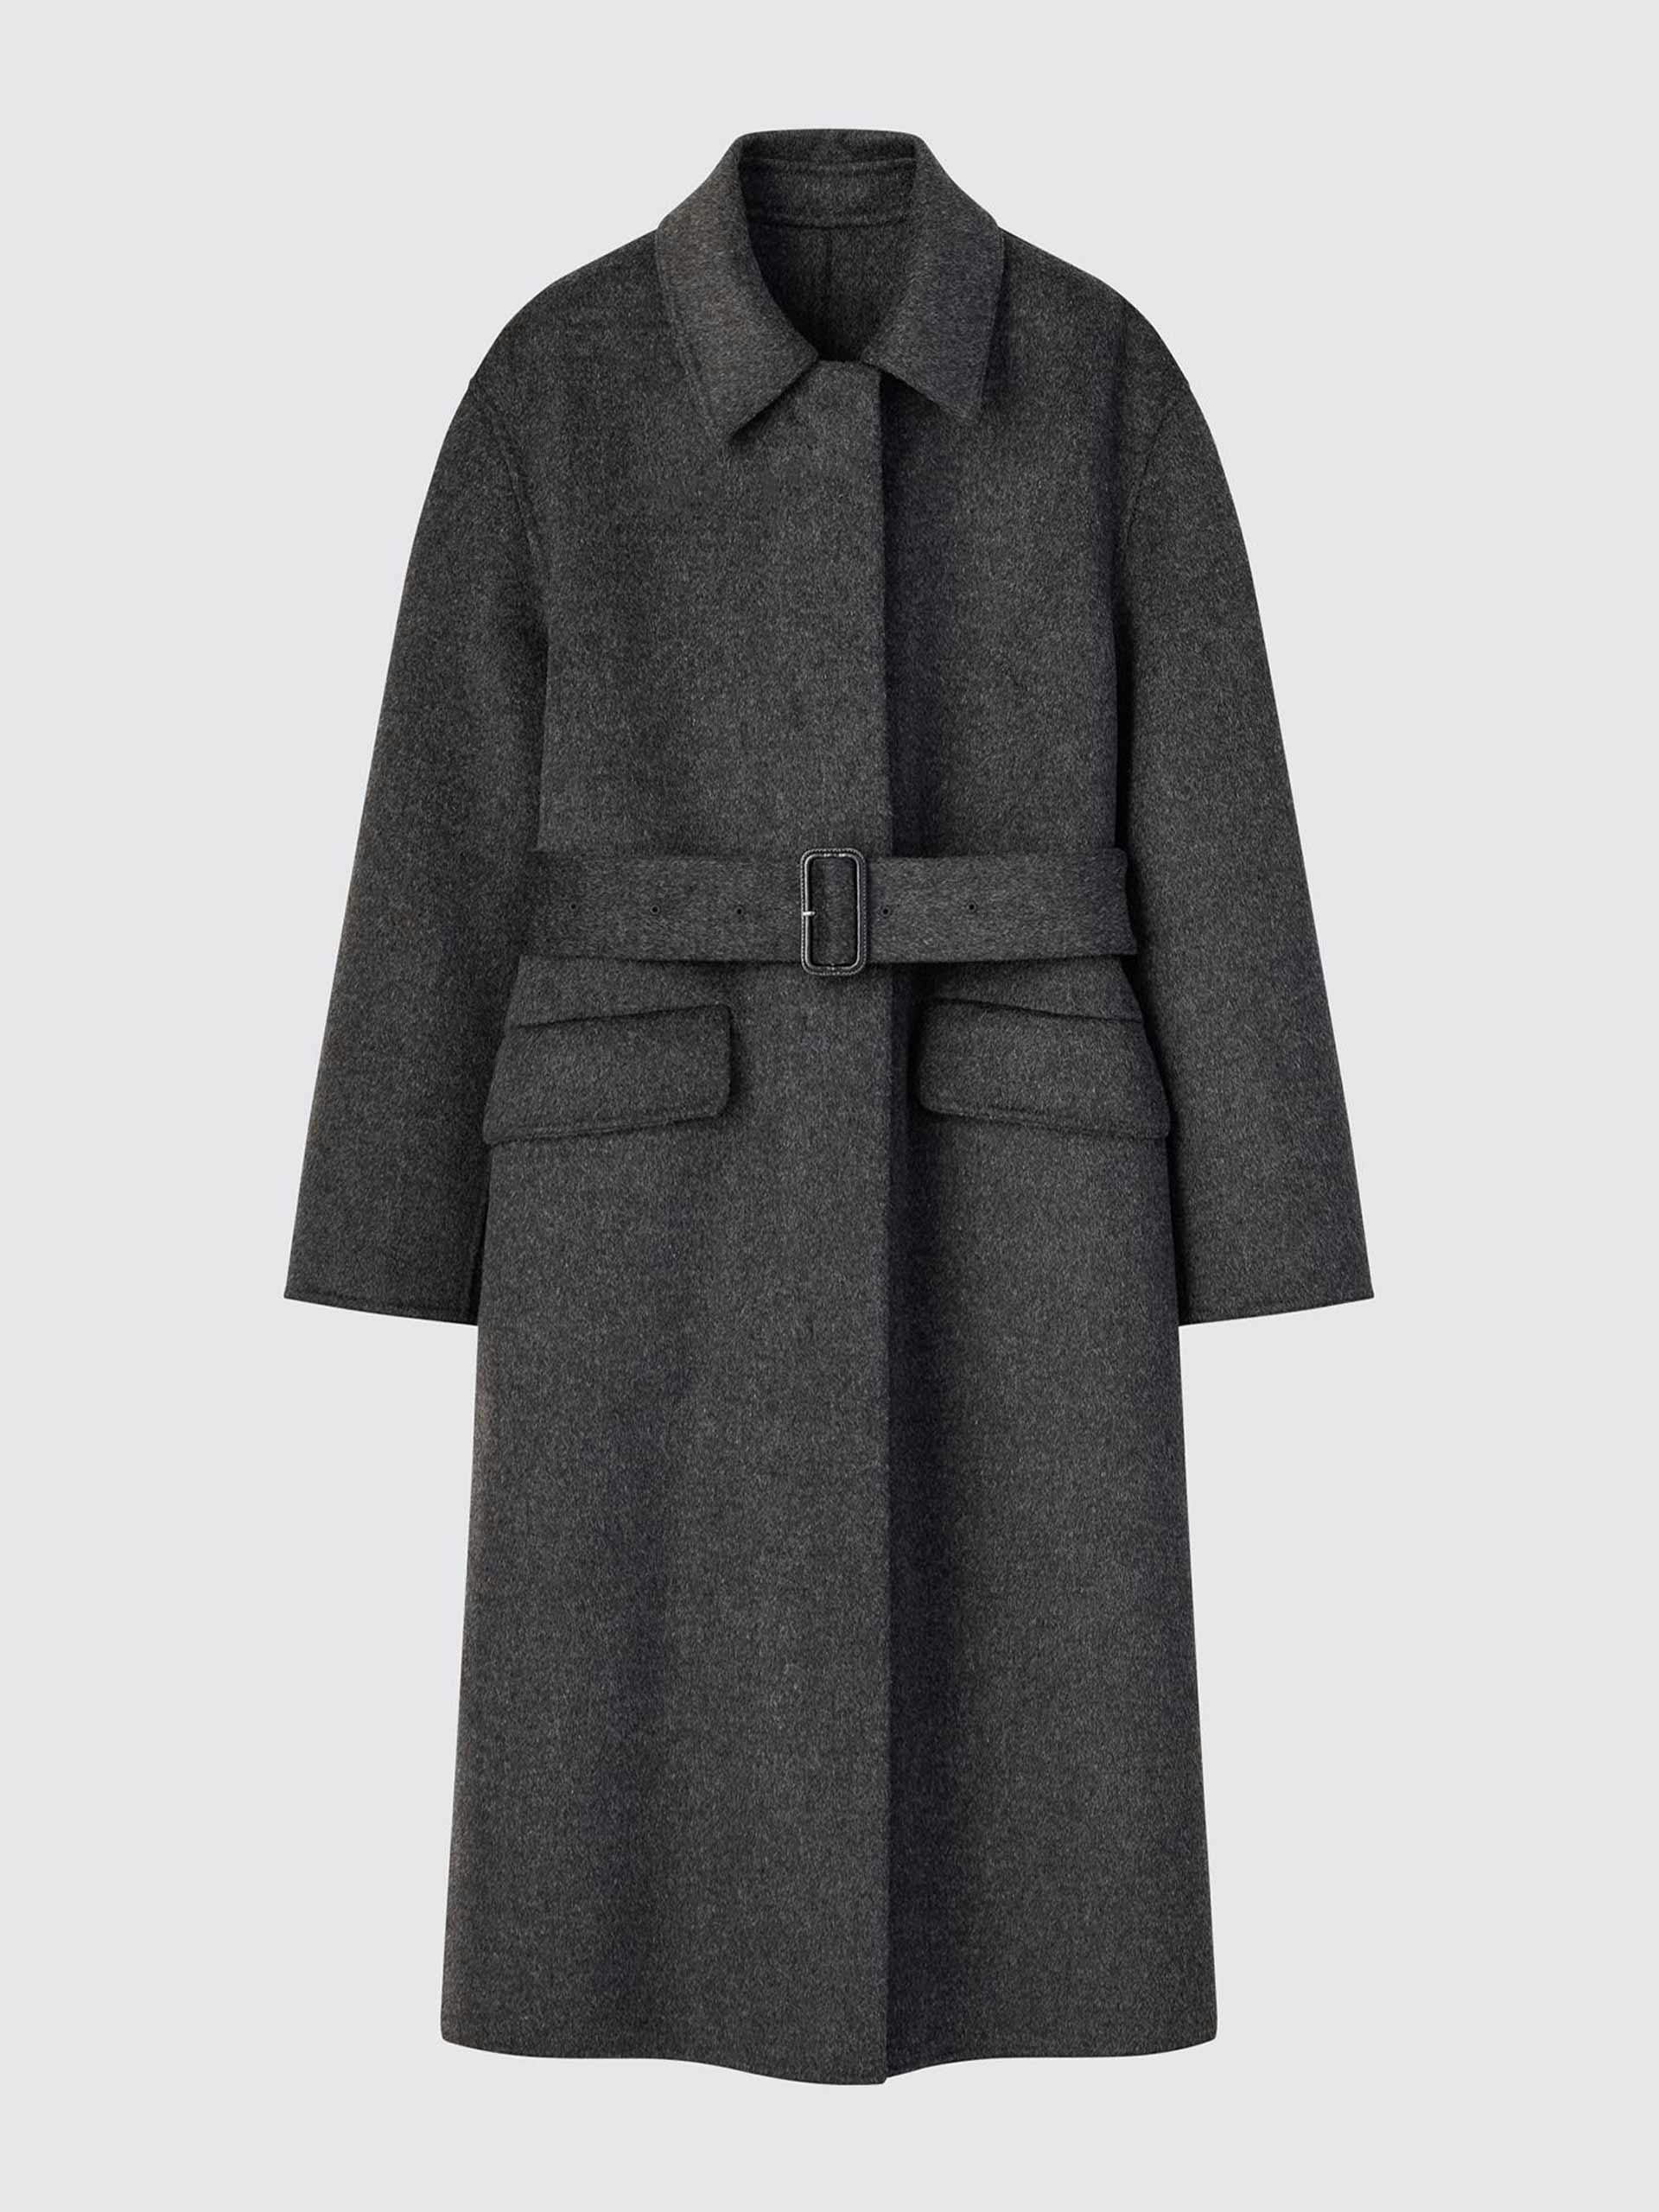 Grey wool belted coat